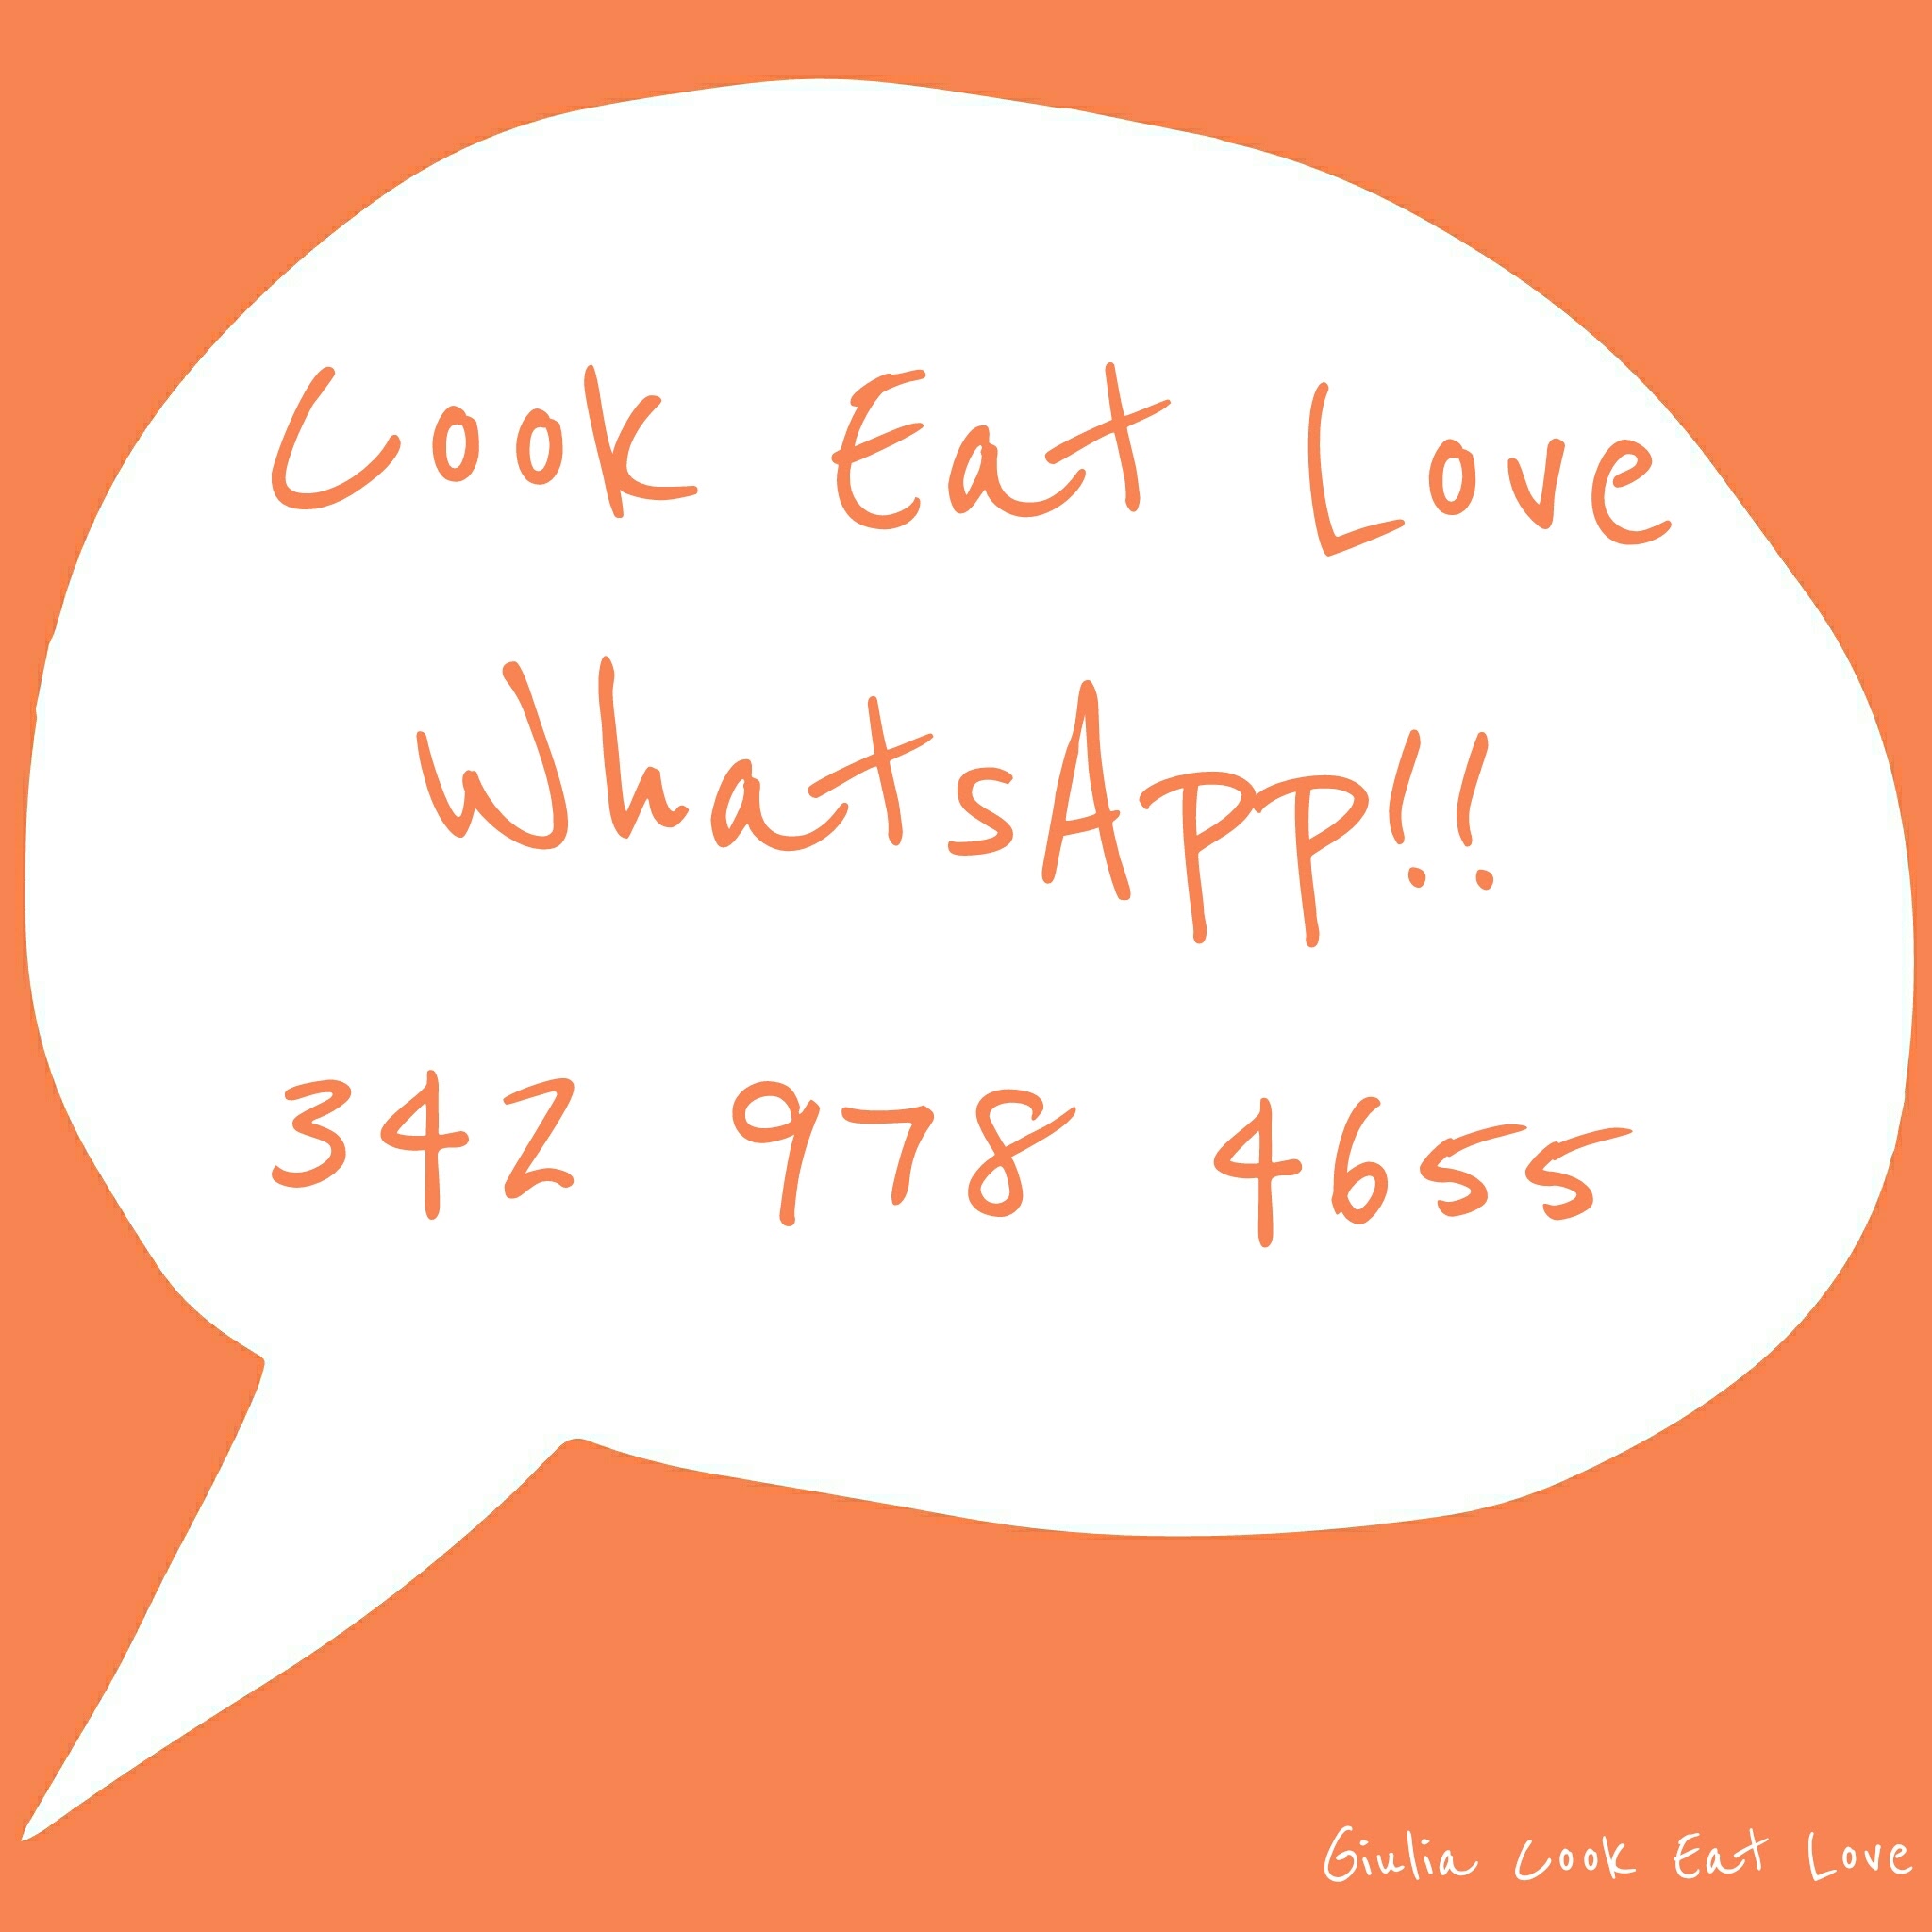 Cook Eat Love WhatsApp